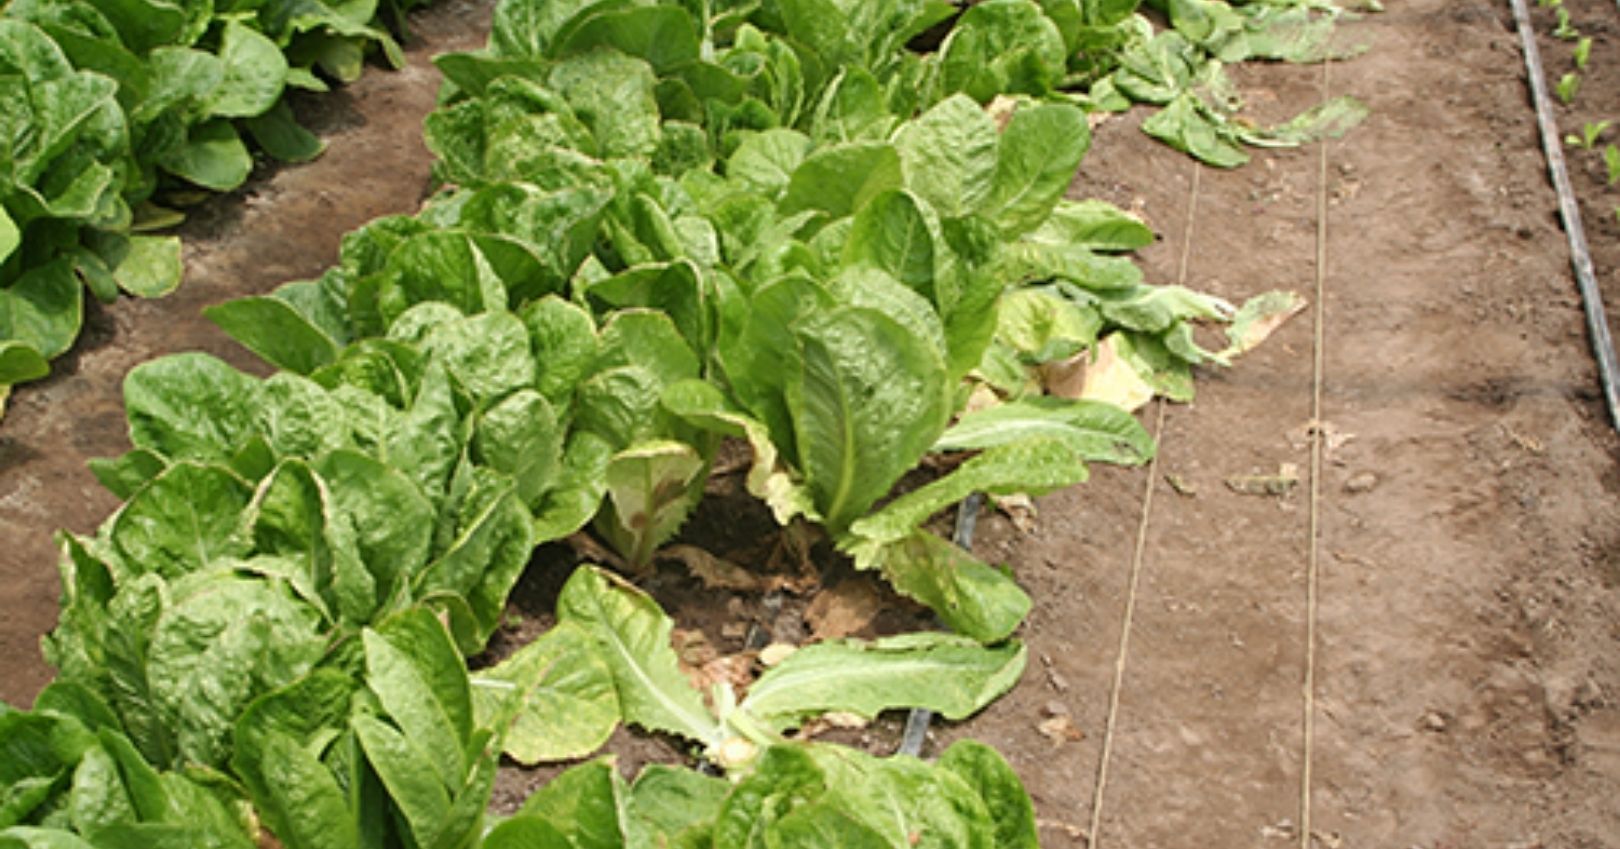 Drop (Sclerotinia Rot) in Lettuce